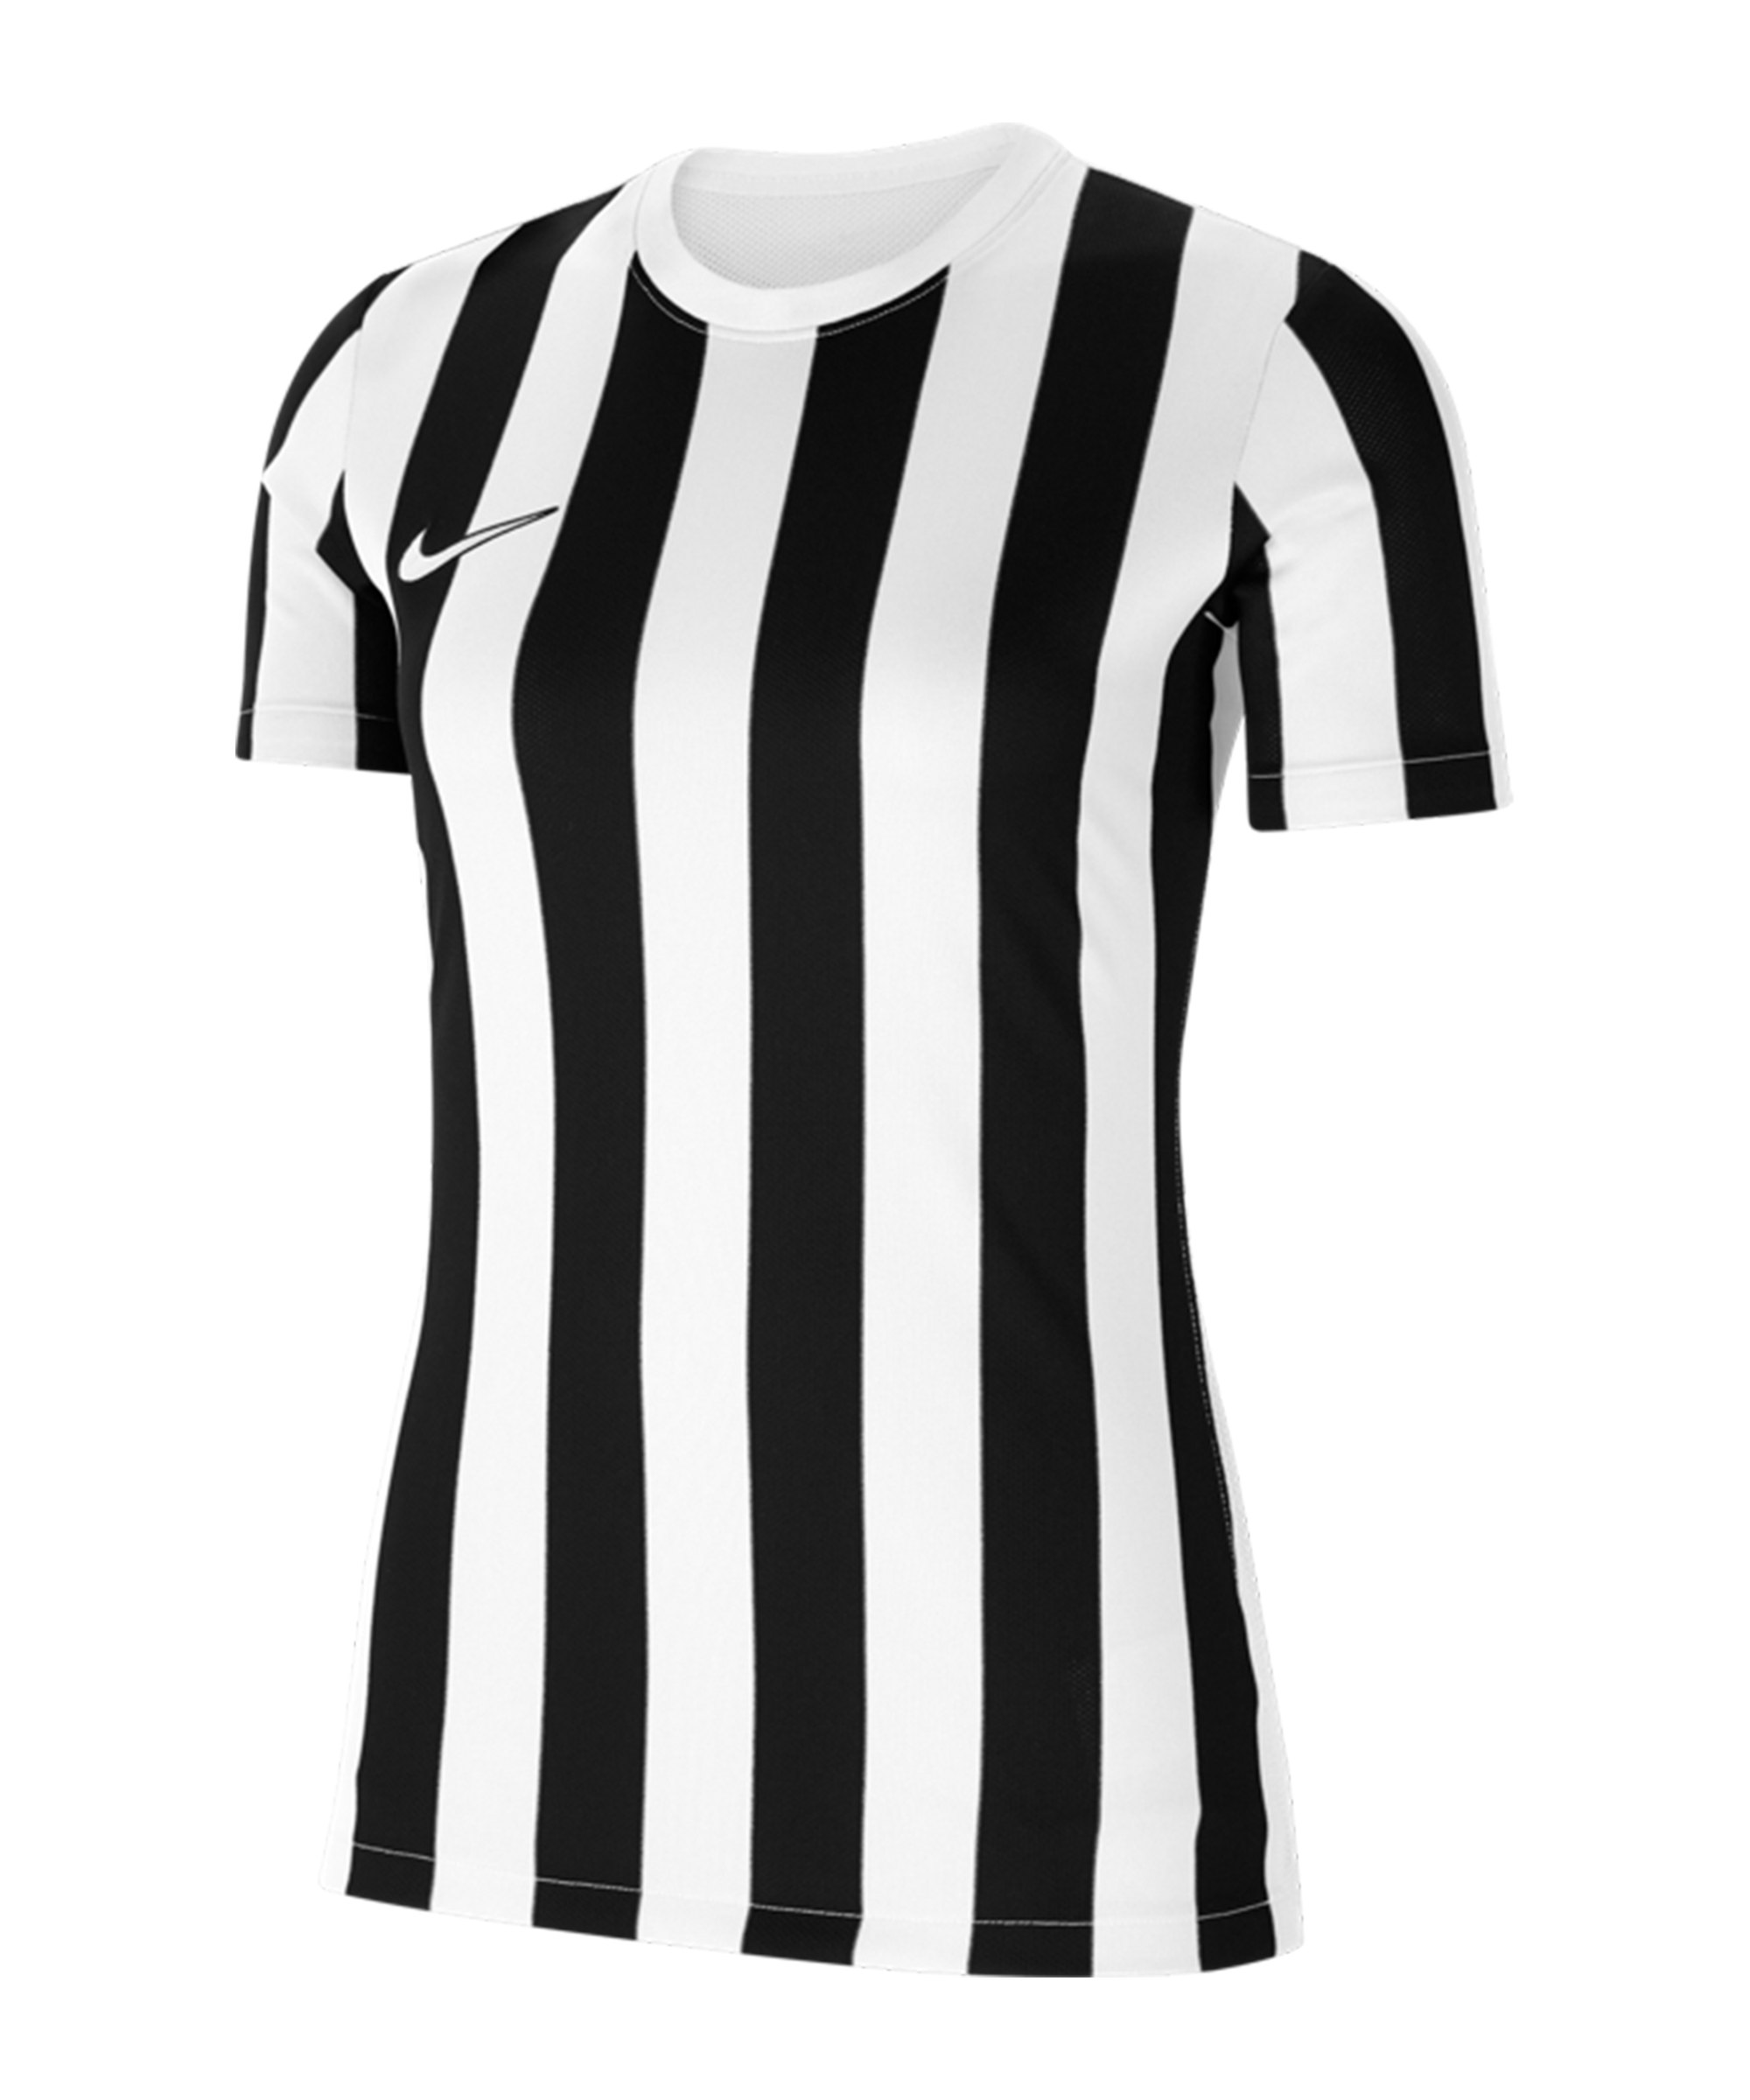 Nike Division IV Striped Trikot kurzarm Damen F100 - weiss